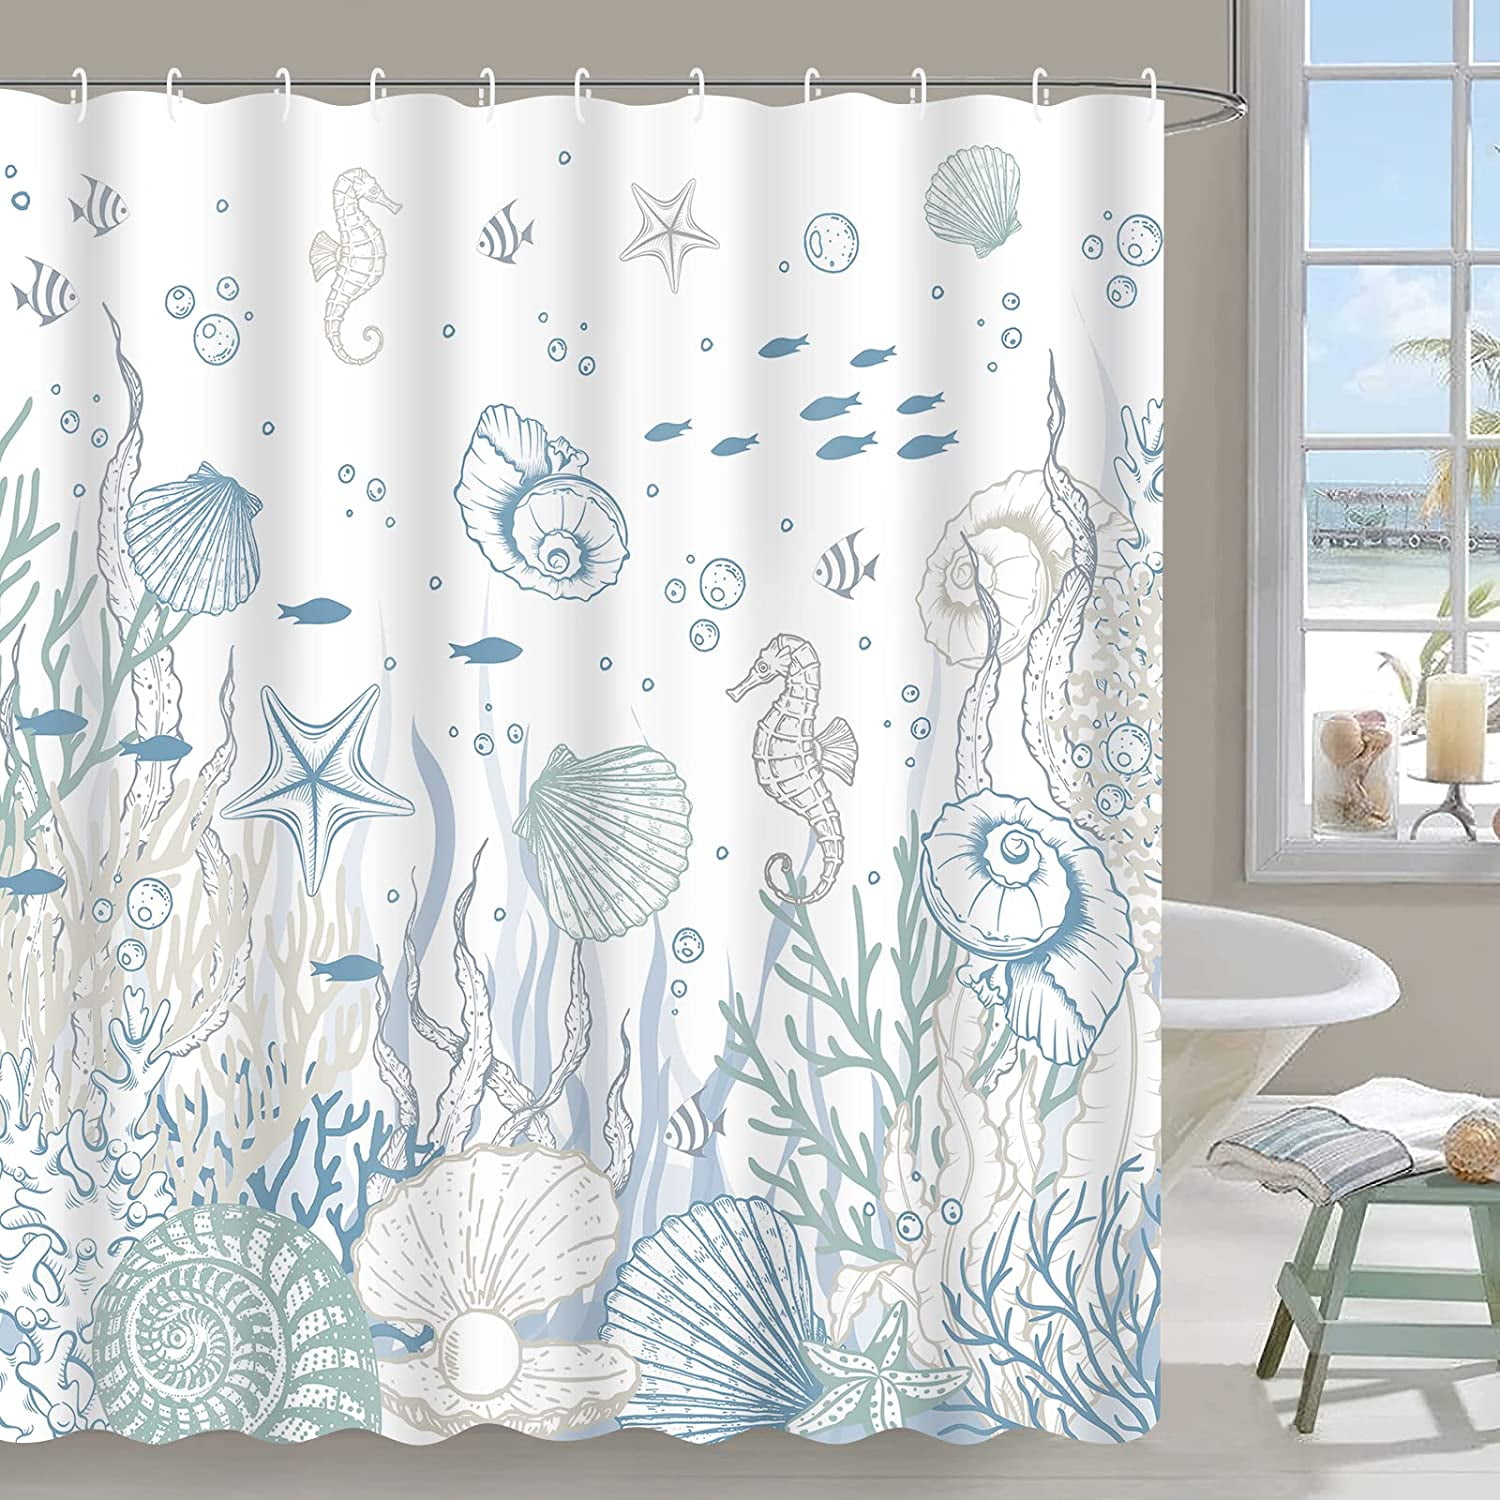  AnyDesign 12Pcs Seashell Shower Curtain Hooks Seahorse